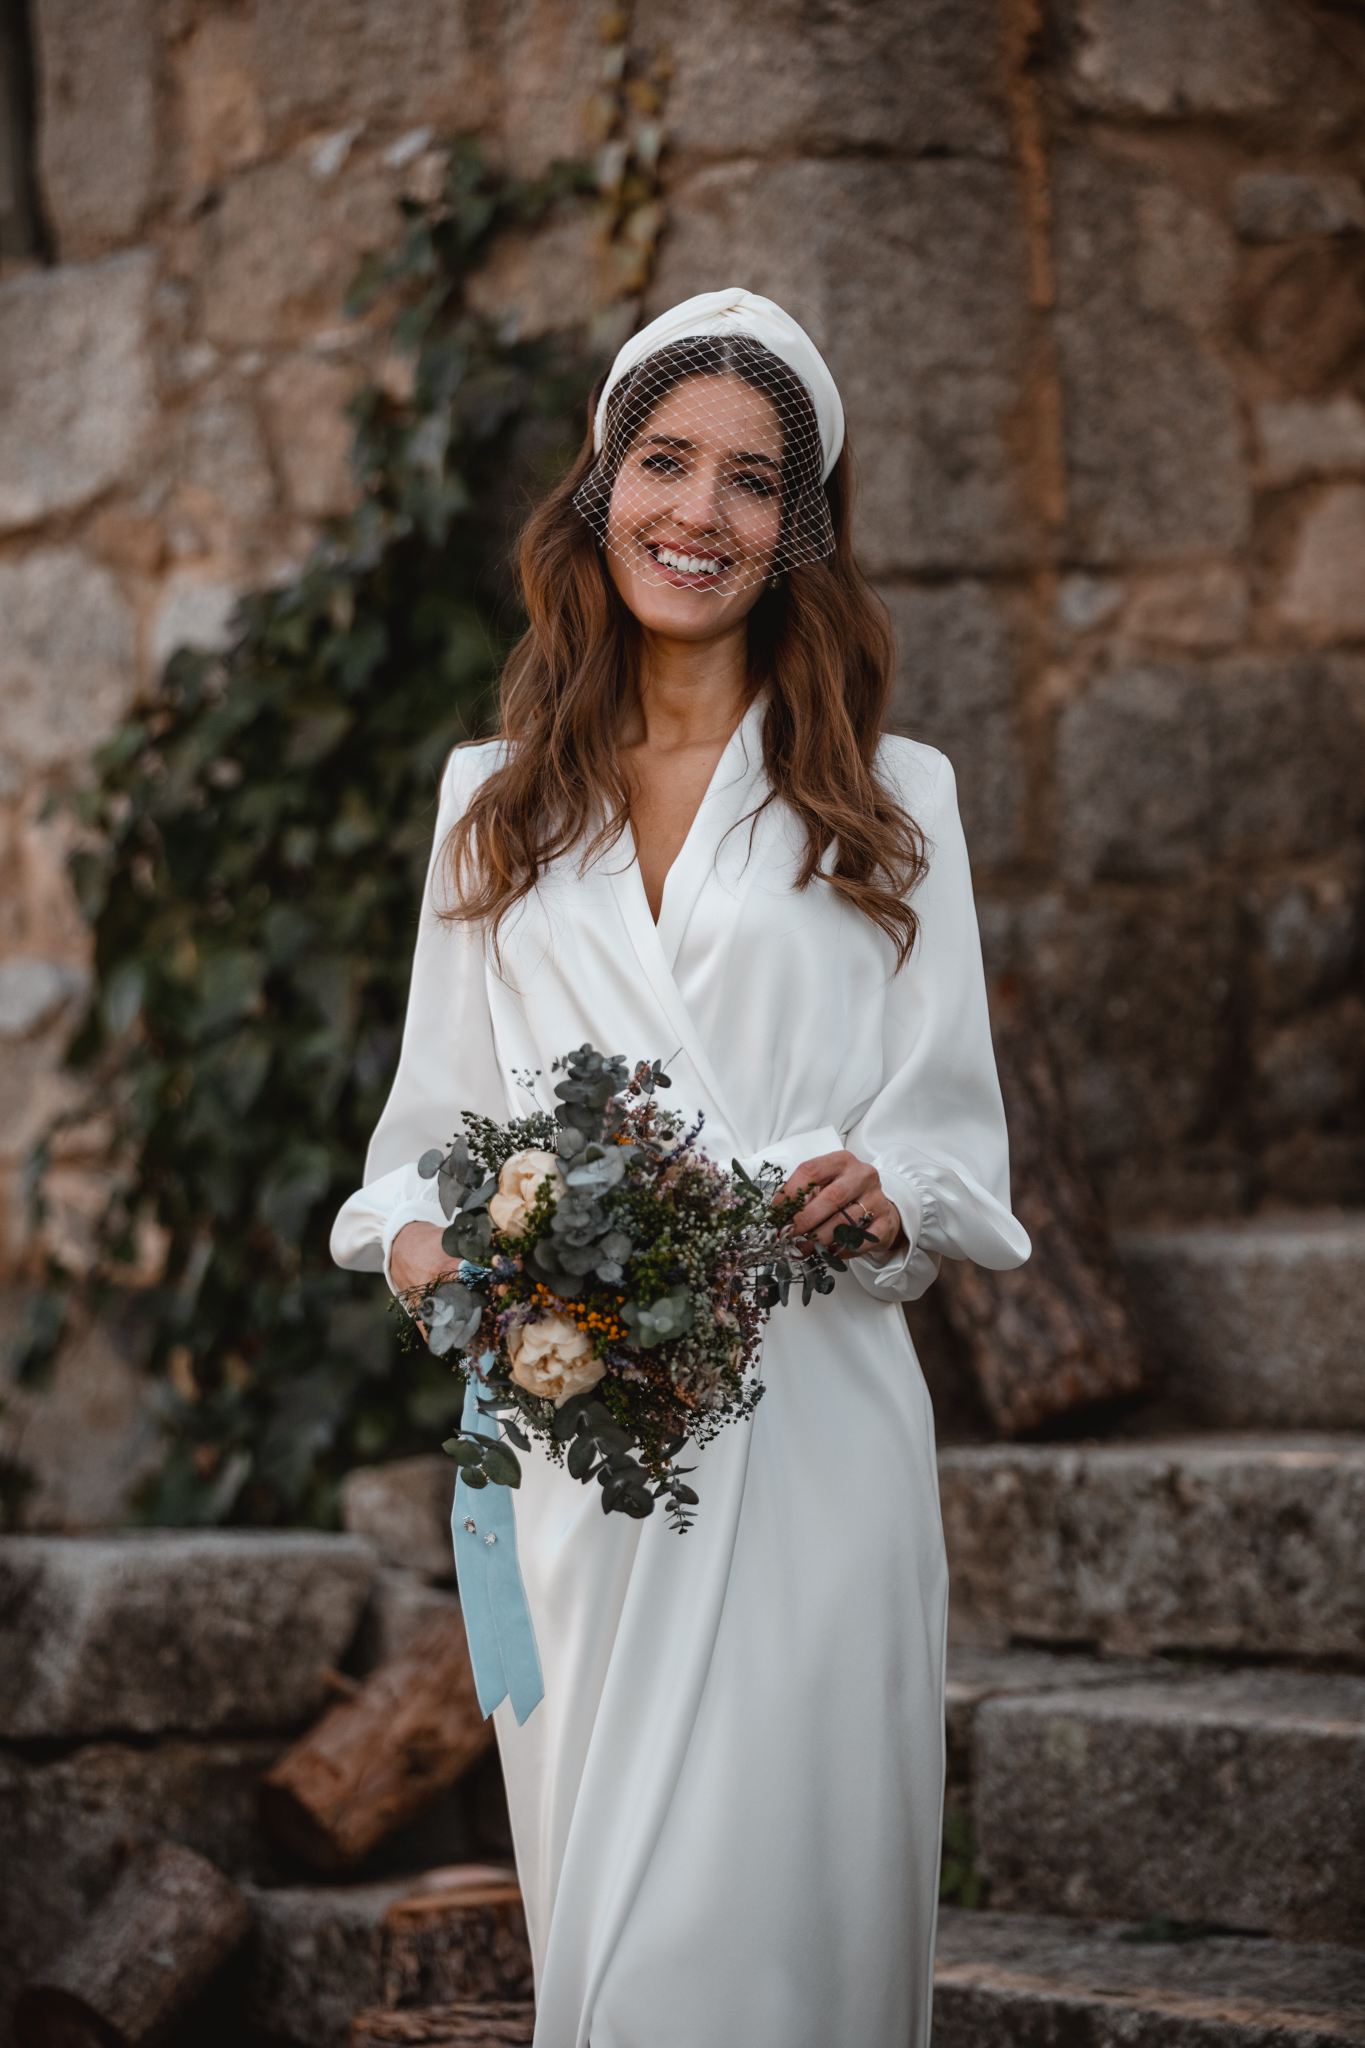 Vestido blanco midi para bautizo o boda civil